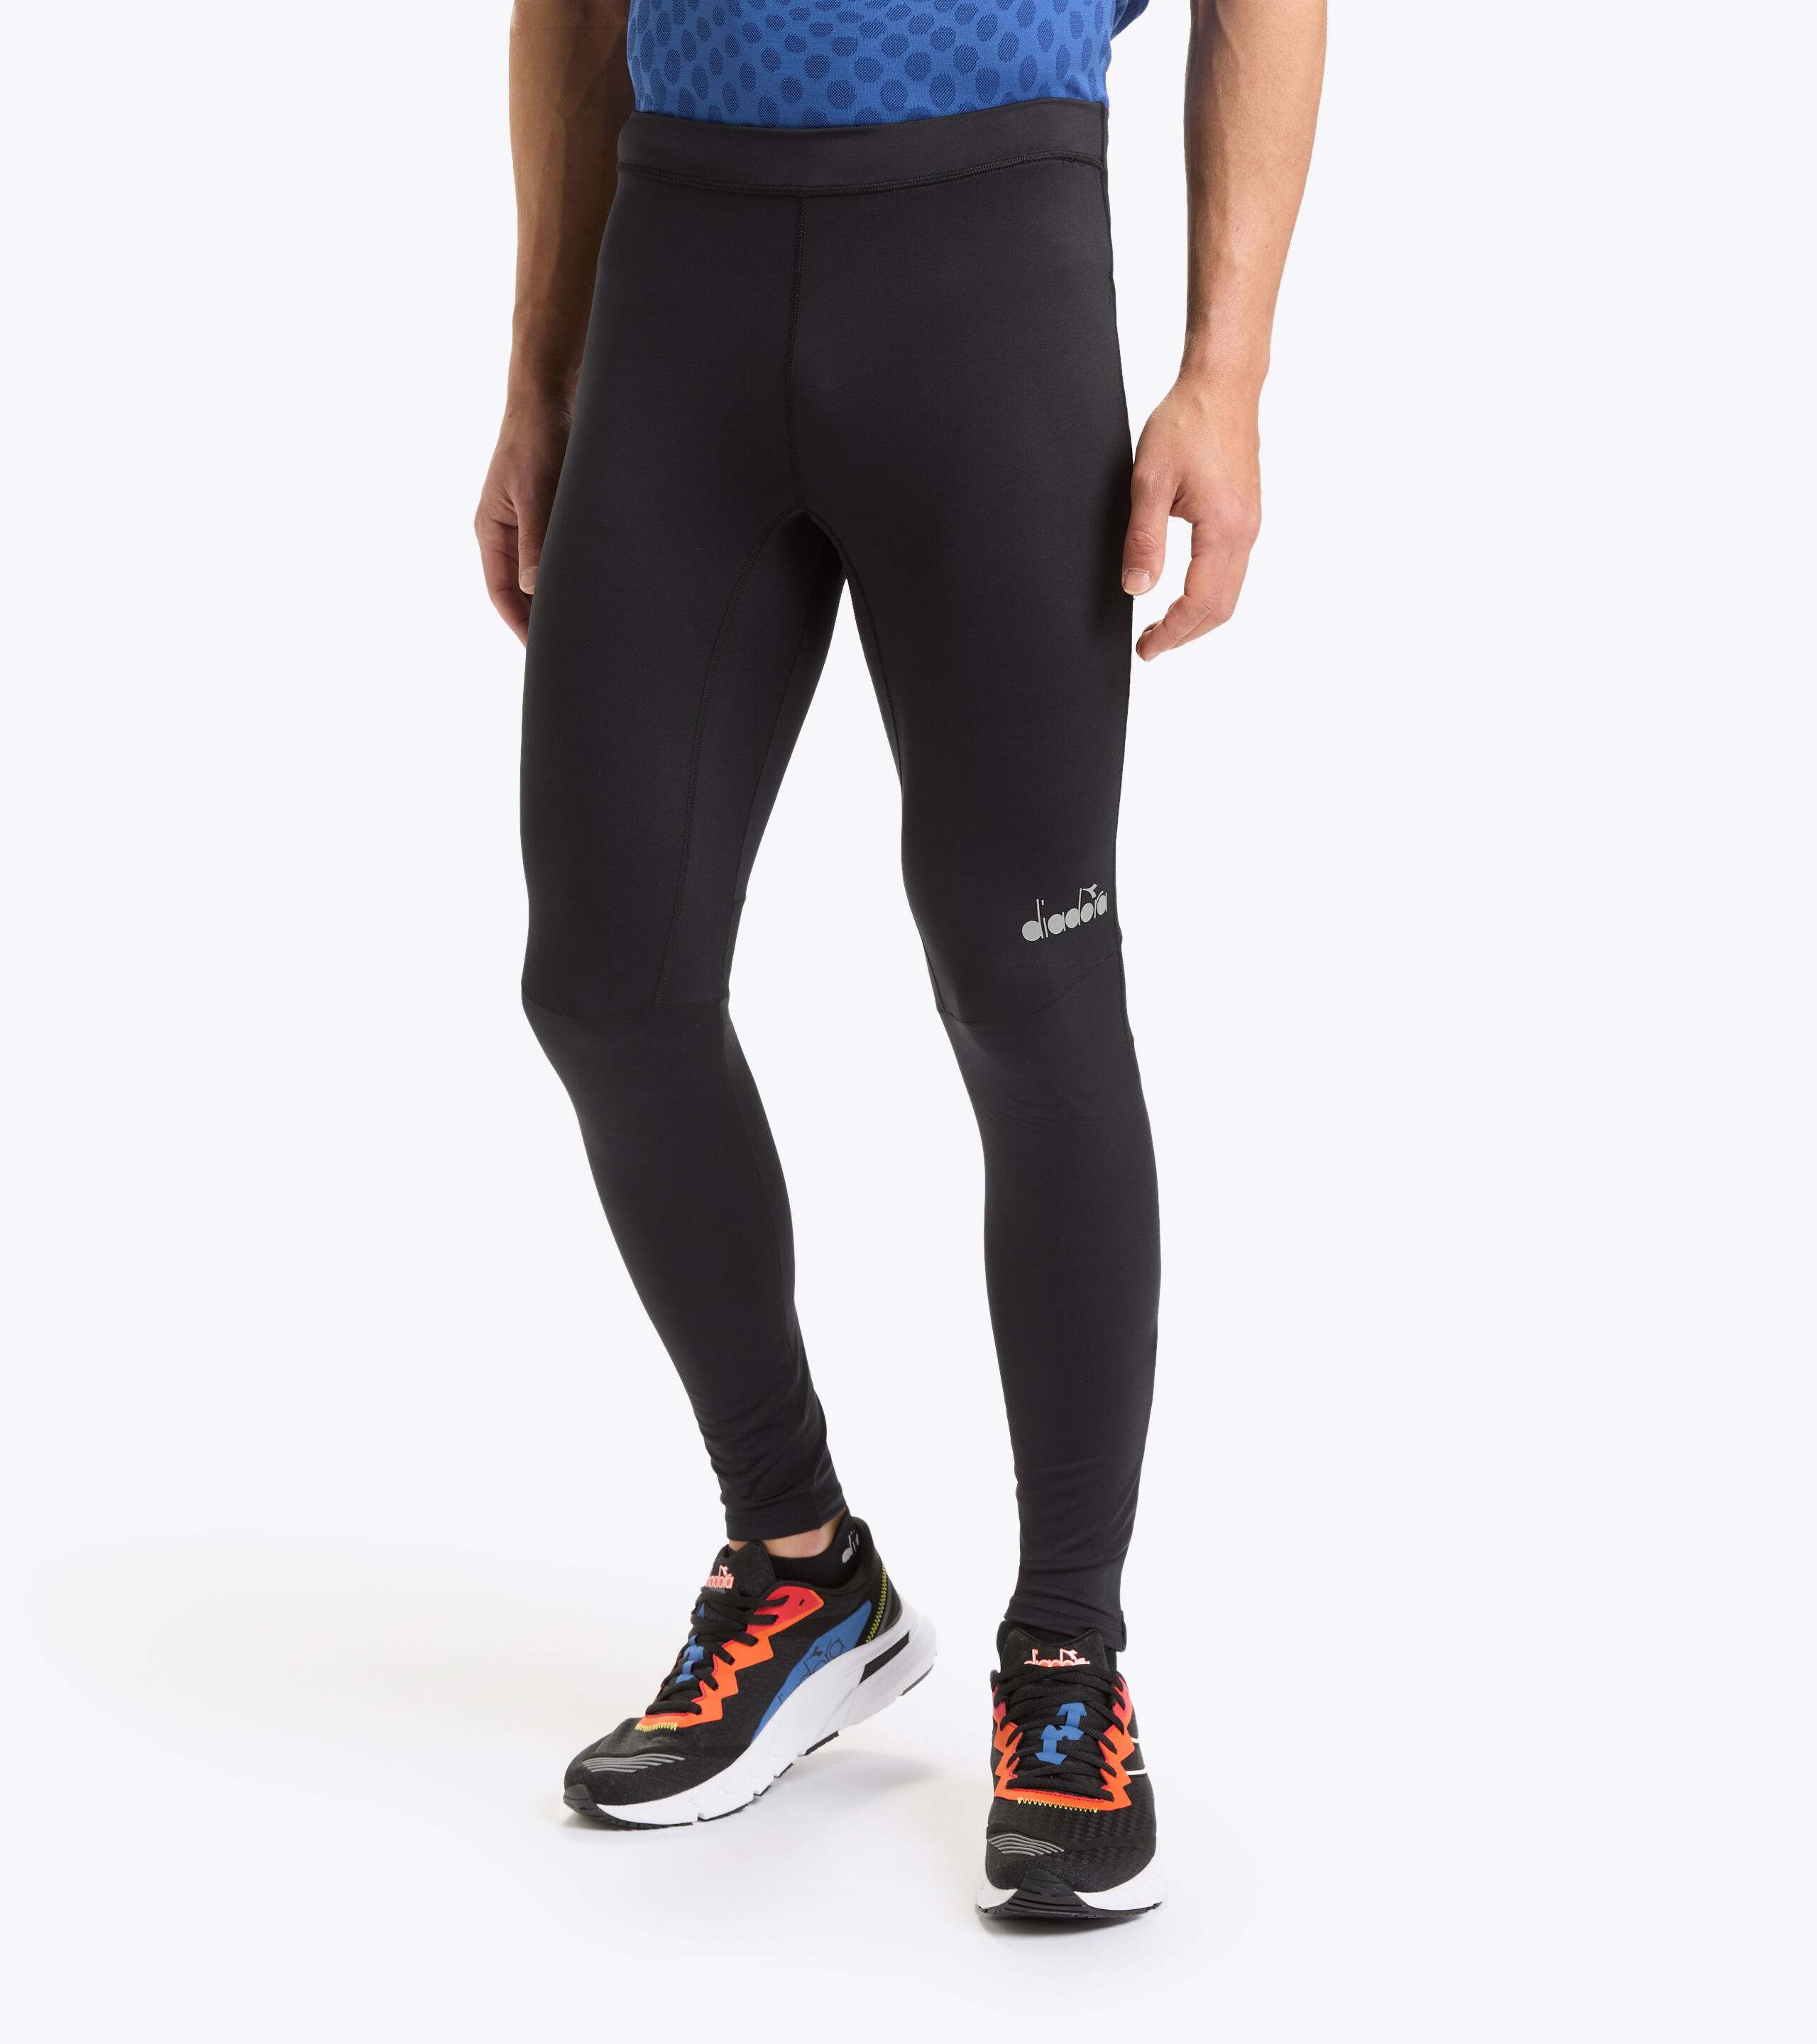 Runners' lab | Brooks Run Visible Thermal| Running Tight Men